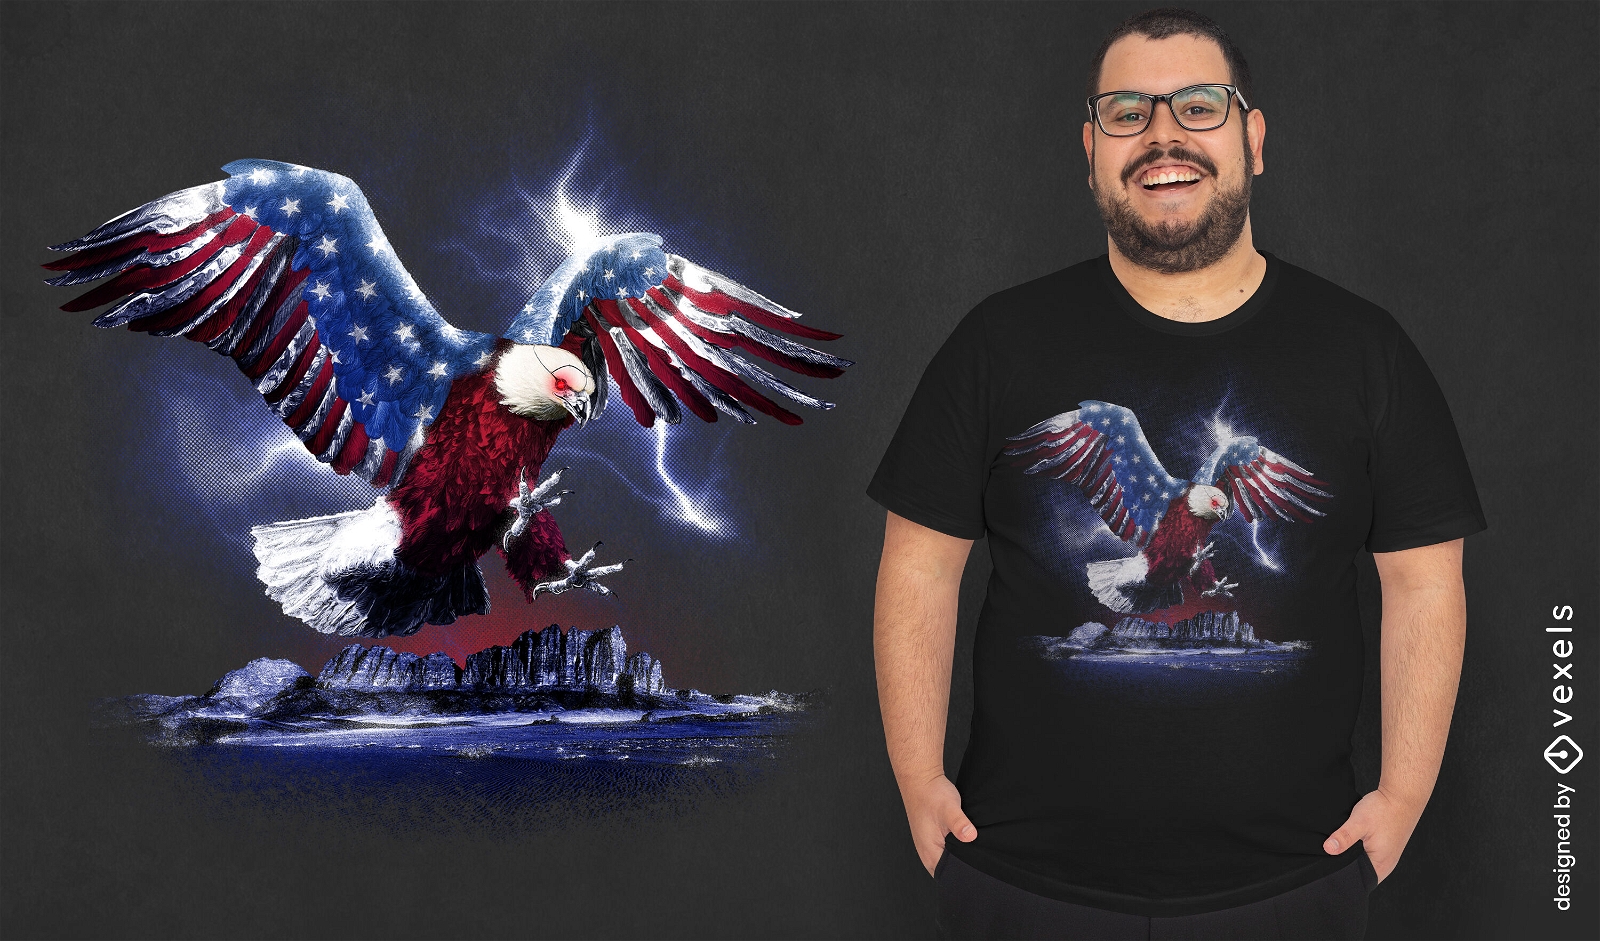 Amerikanisches Cyborg-Adler-T-Shirt-Design